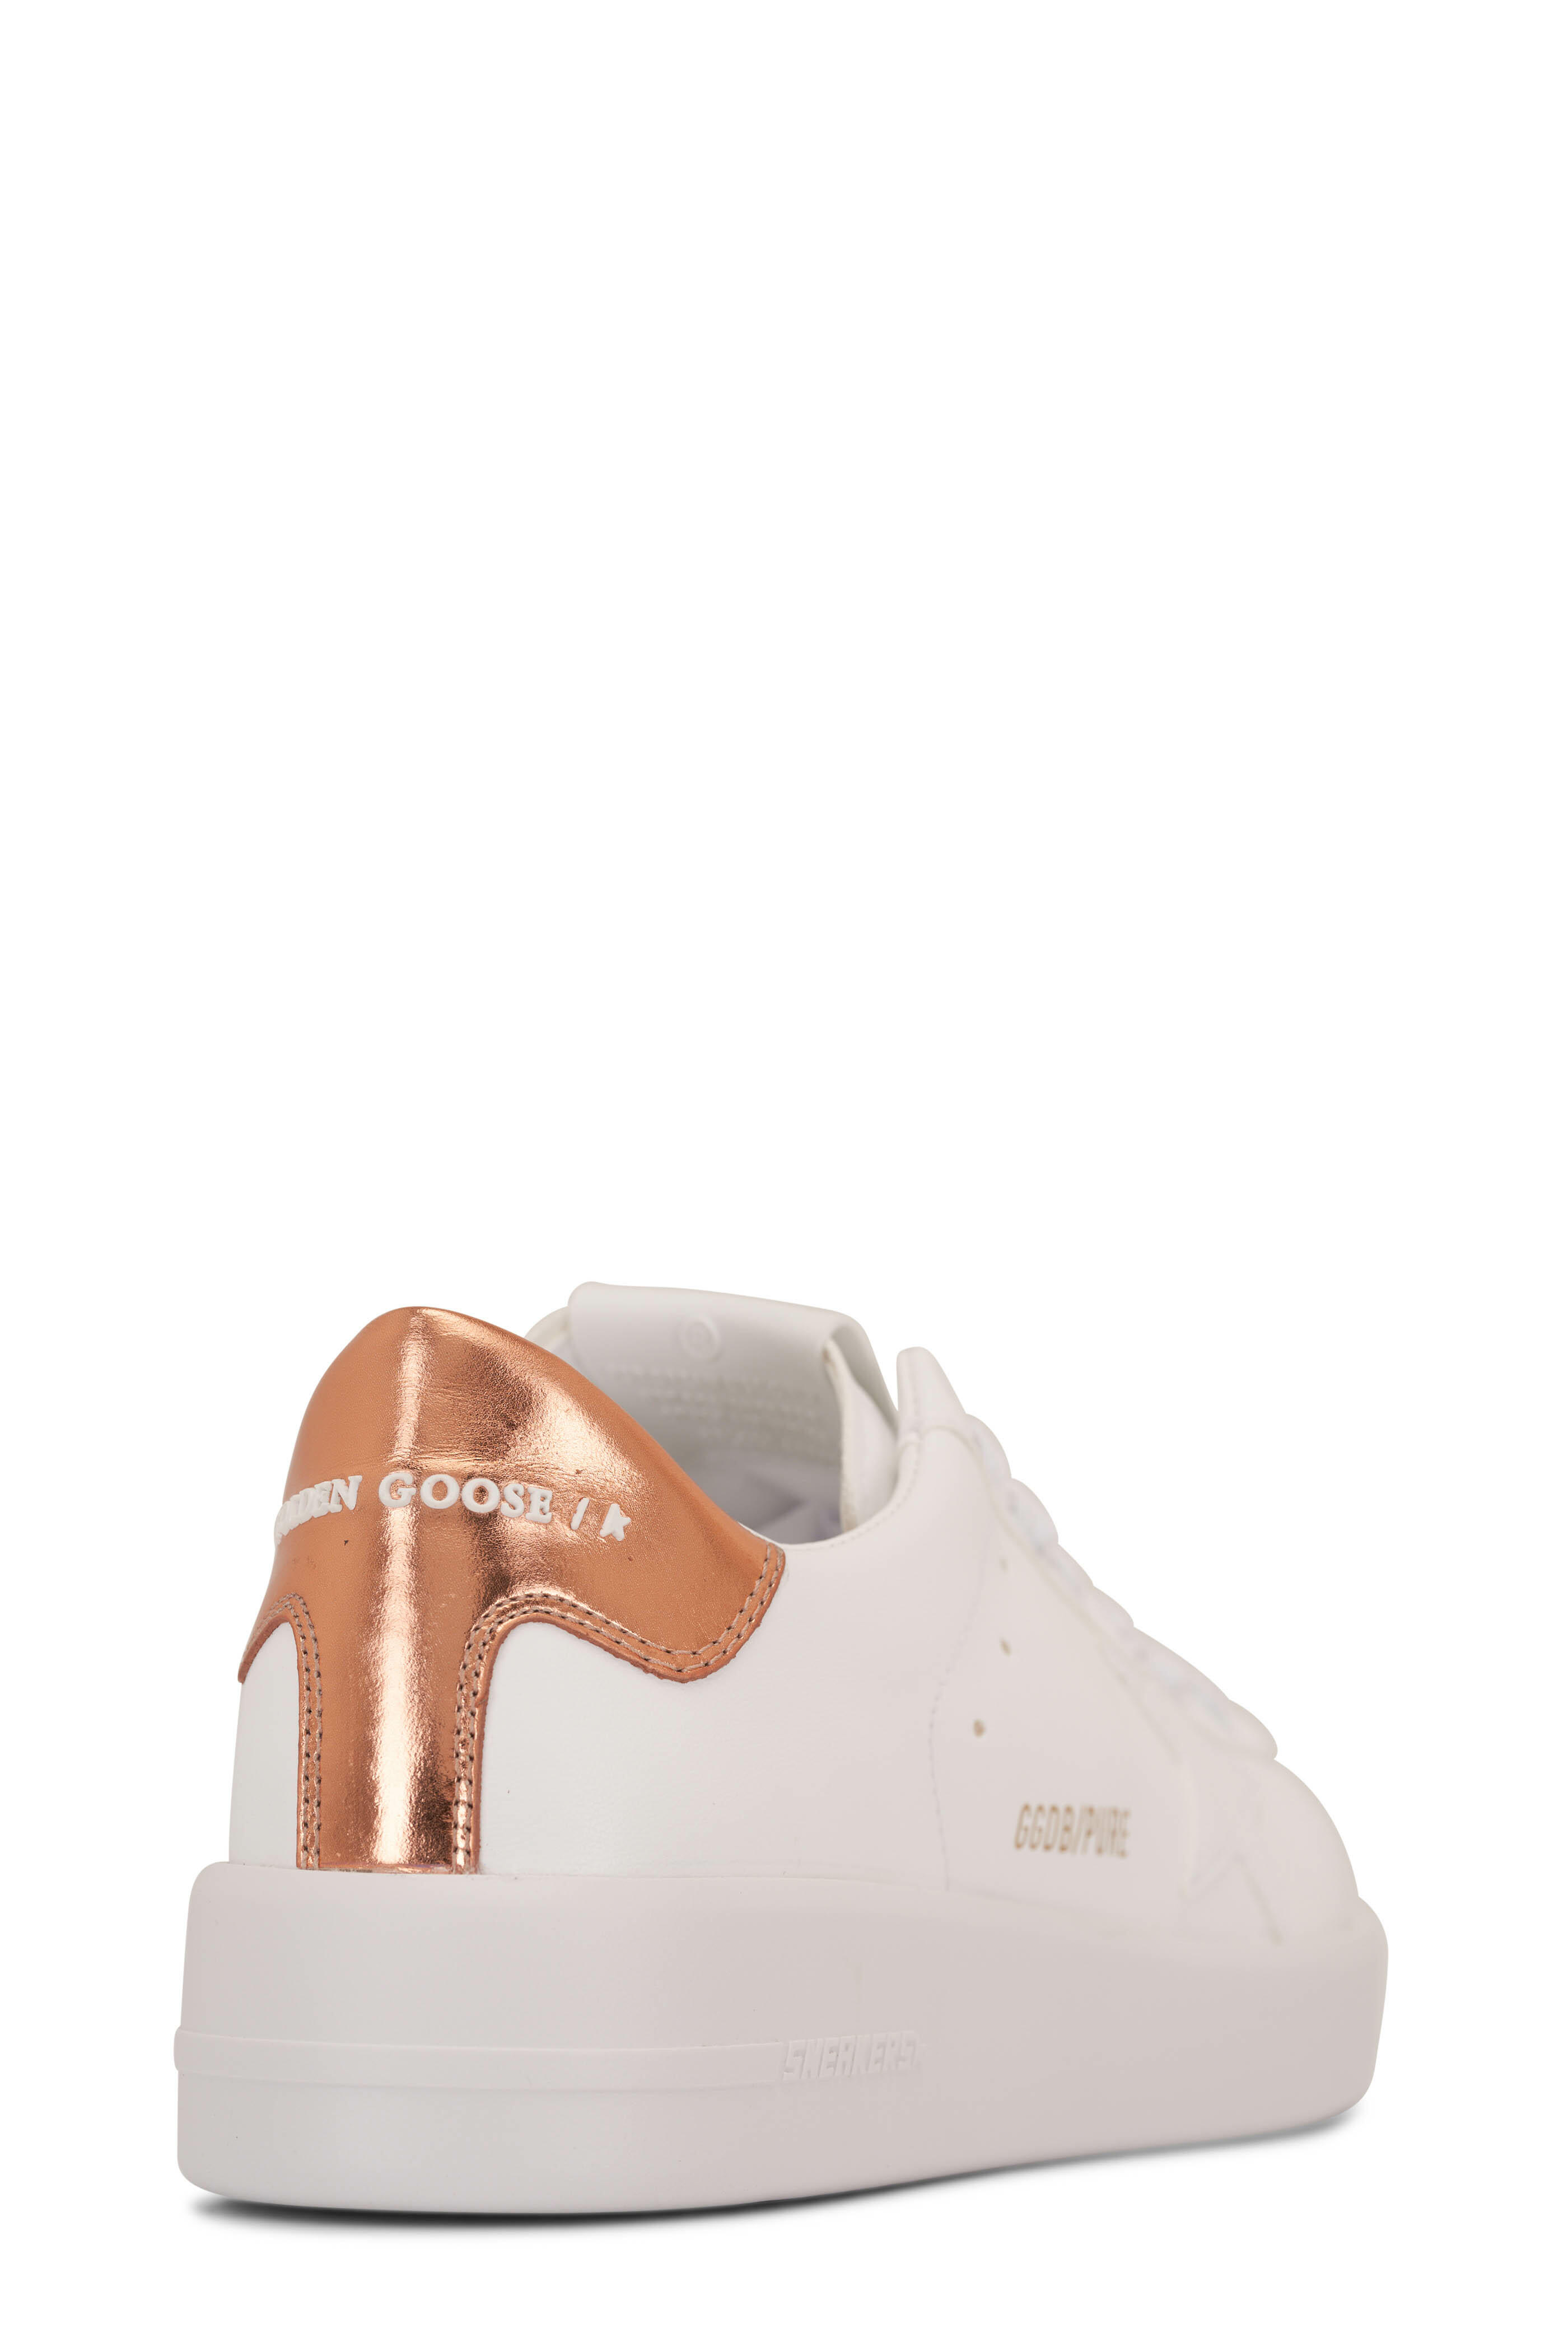 Golden Goose - Pure-Star White & Bronze Low Top Sneaker